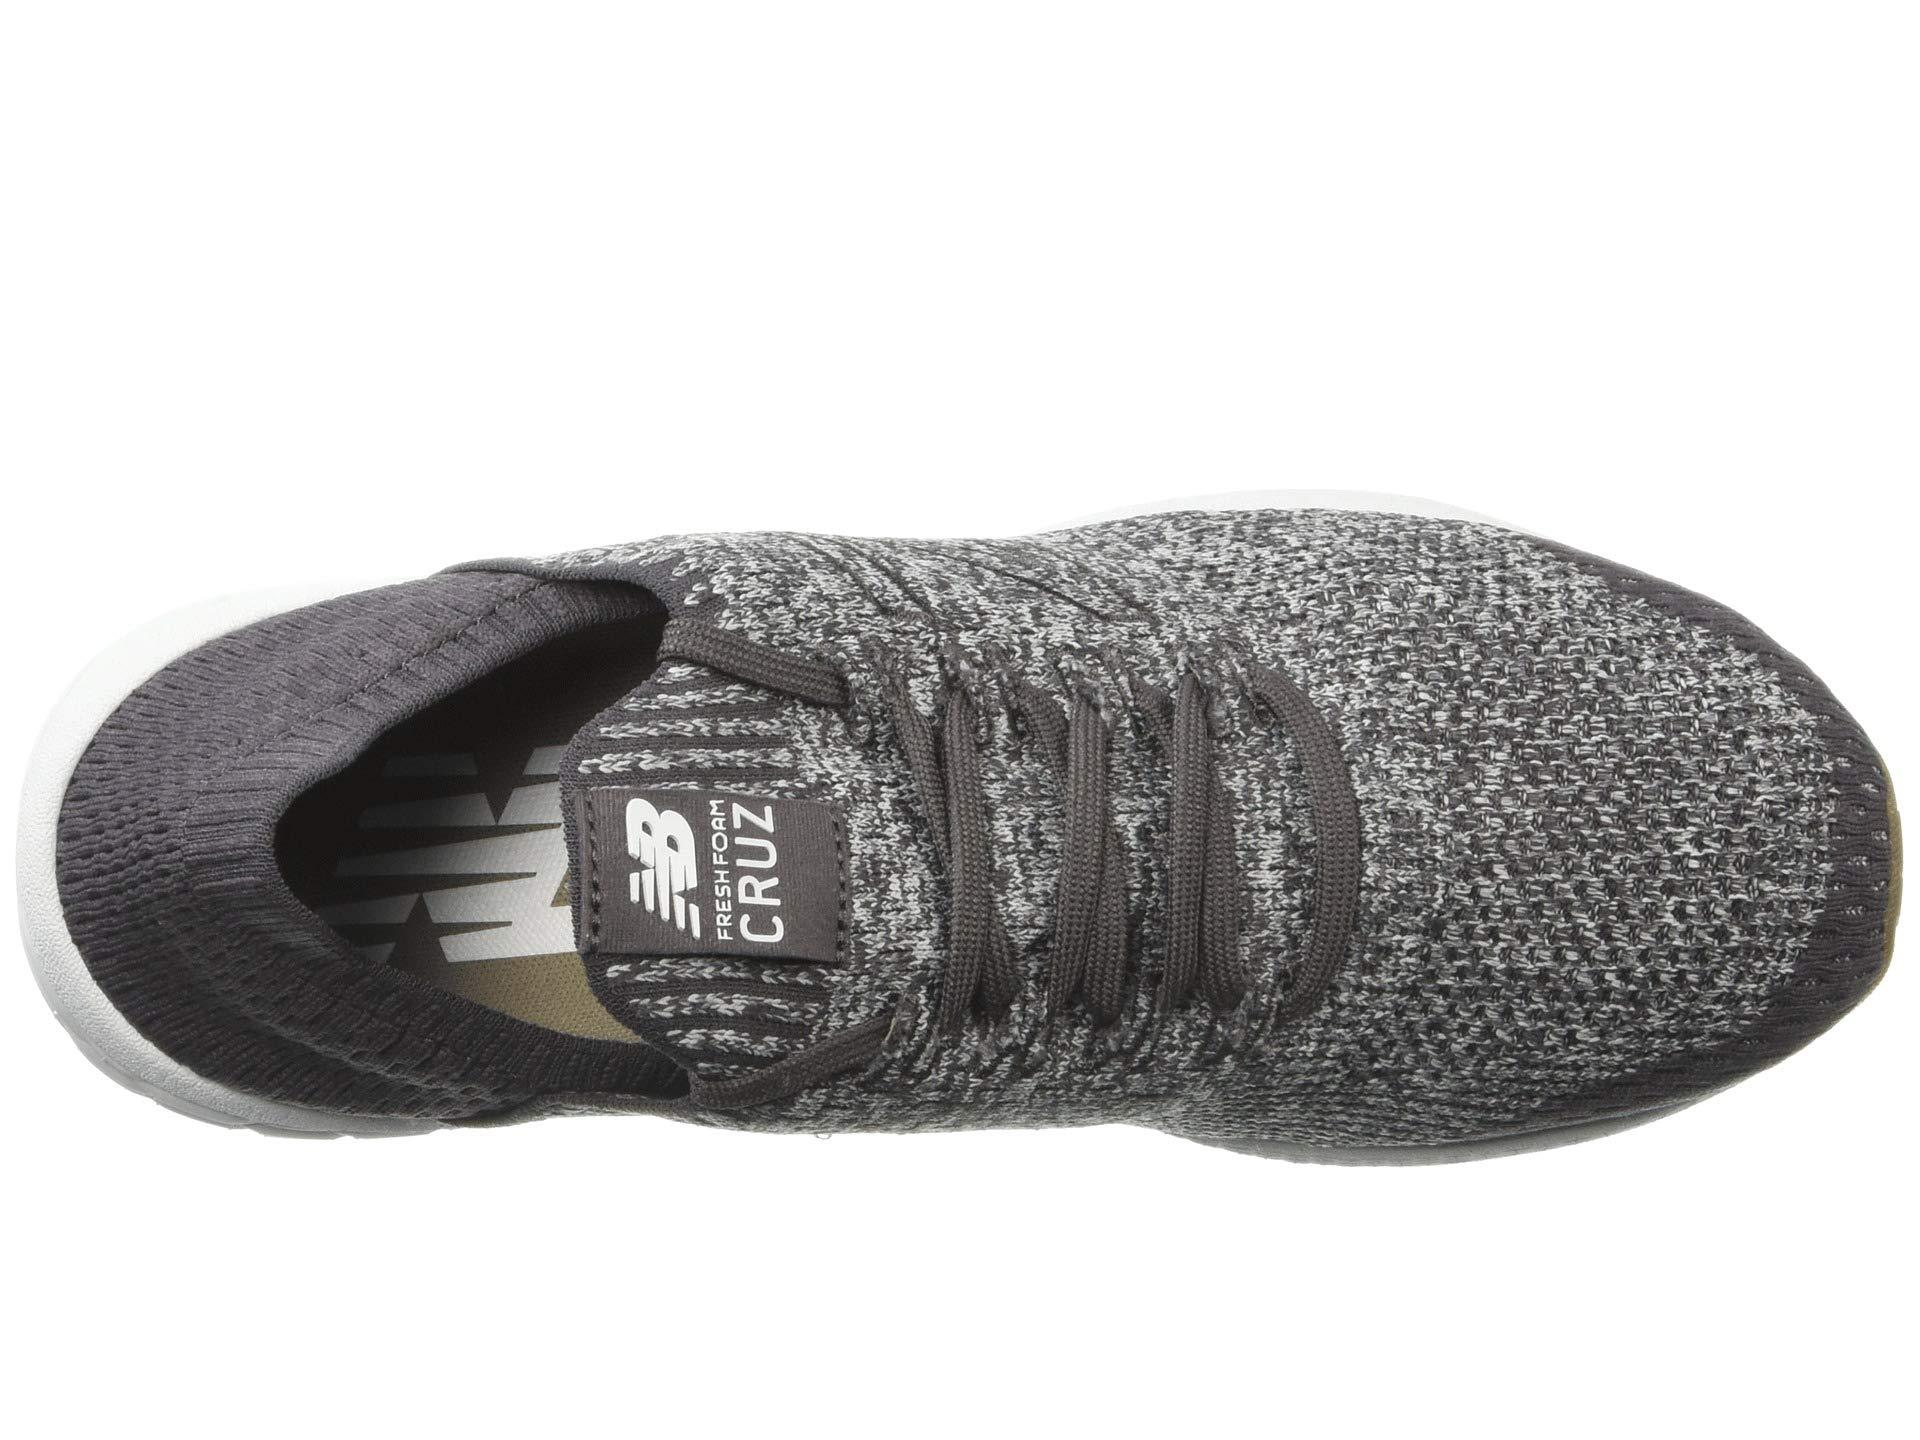 New Balance Fresh Foam Cruz Sport V2 Sneaker in Gray for Men - Save 35% |  Lyst